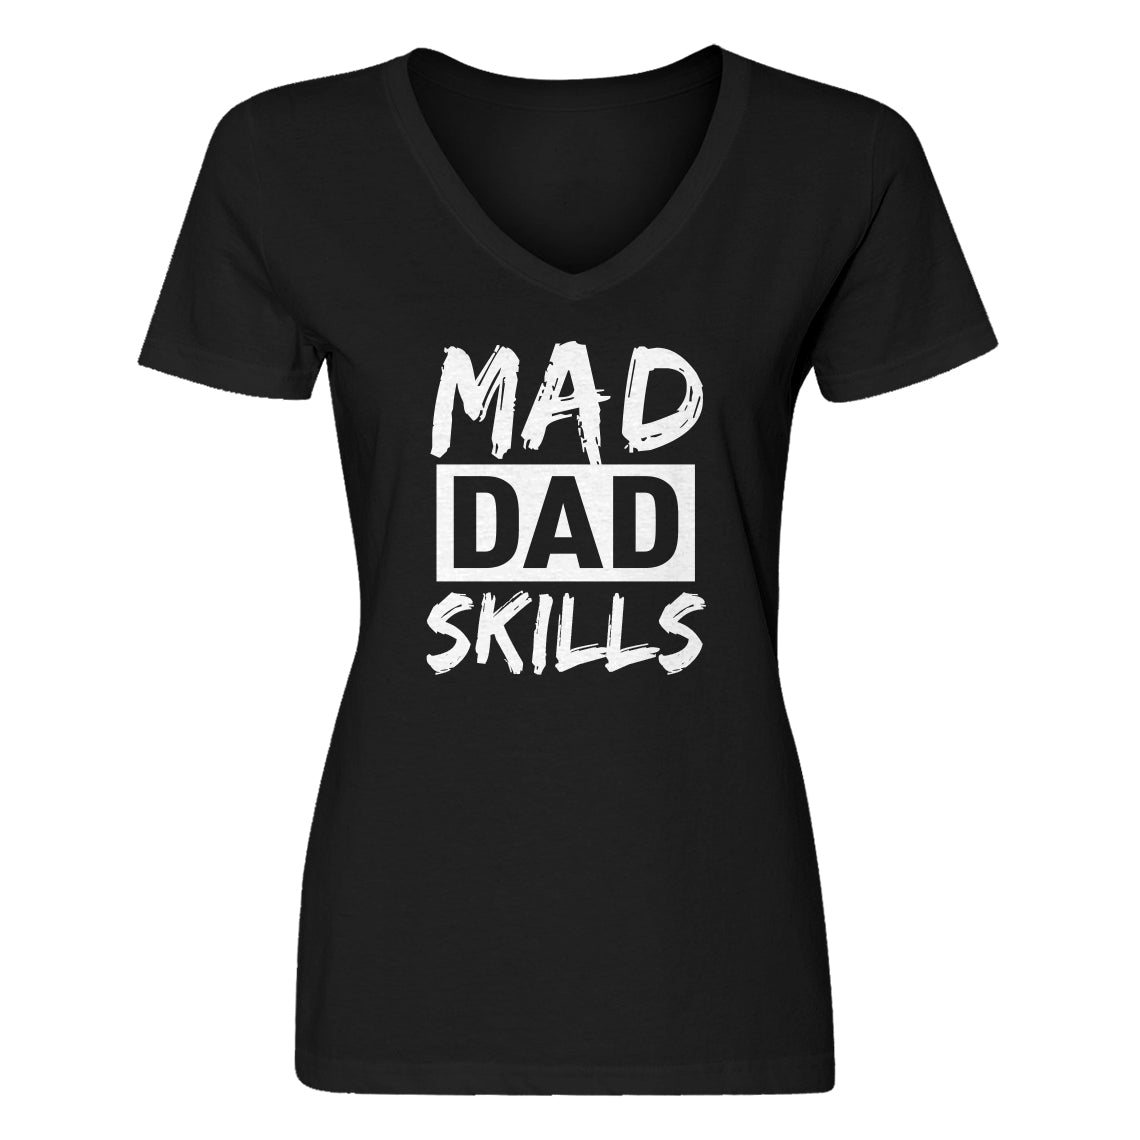 Womens Mad Dad Skills V-Neck T-shirt